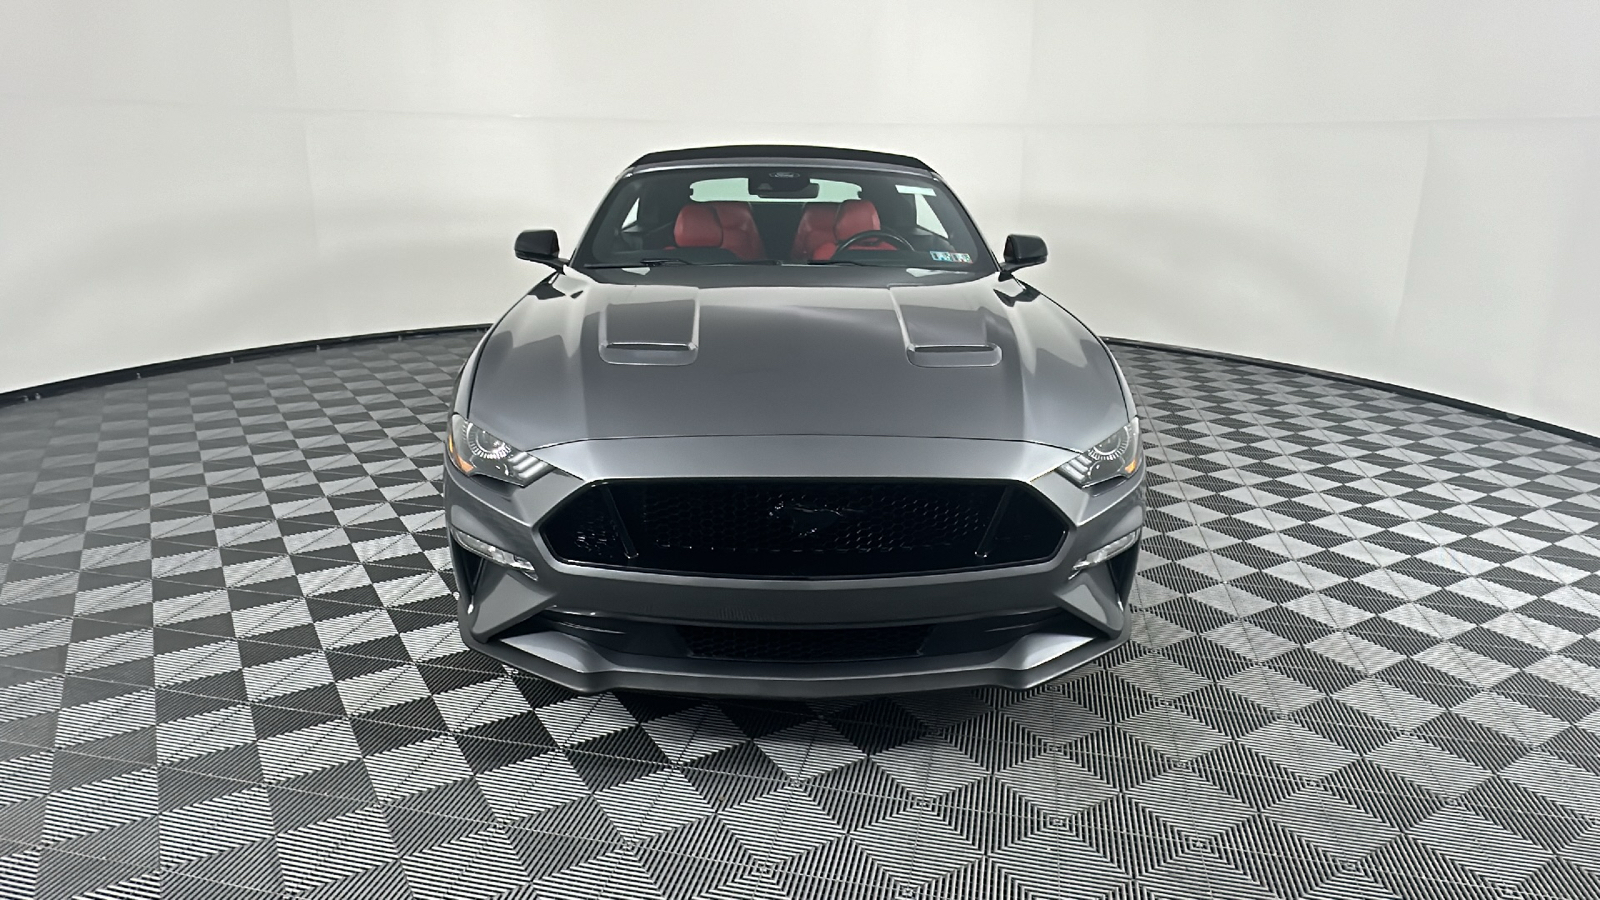 2021 Ford Mustang GT Premium 5